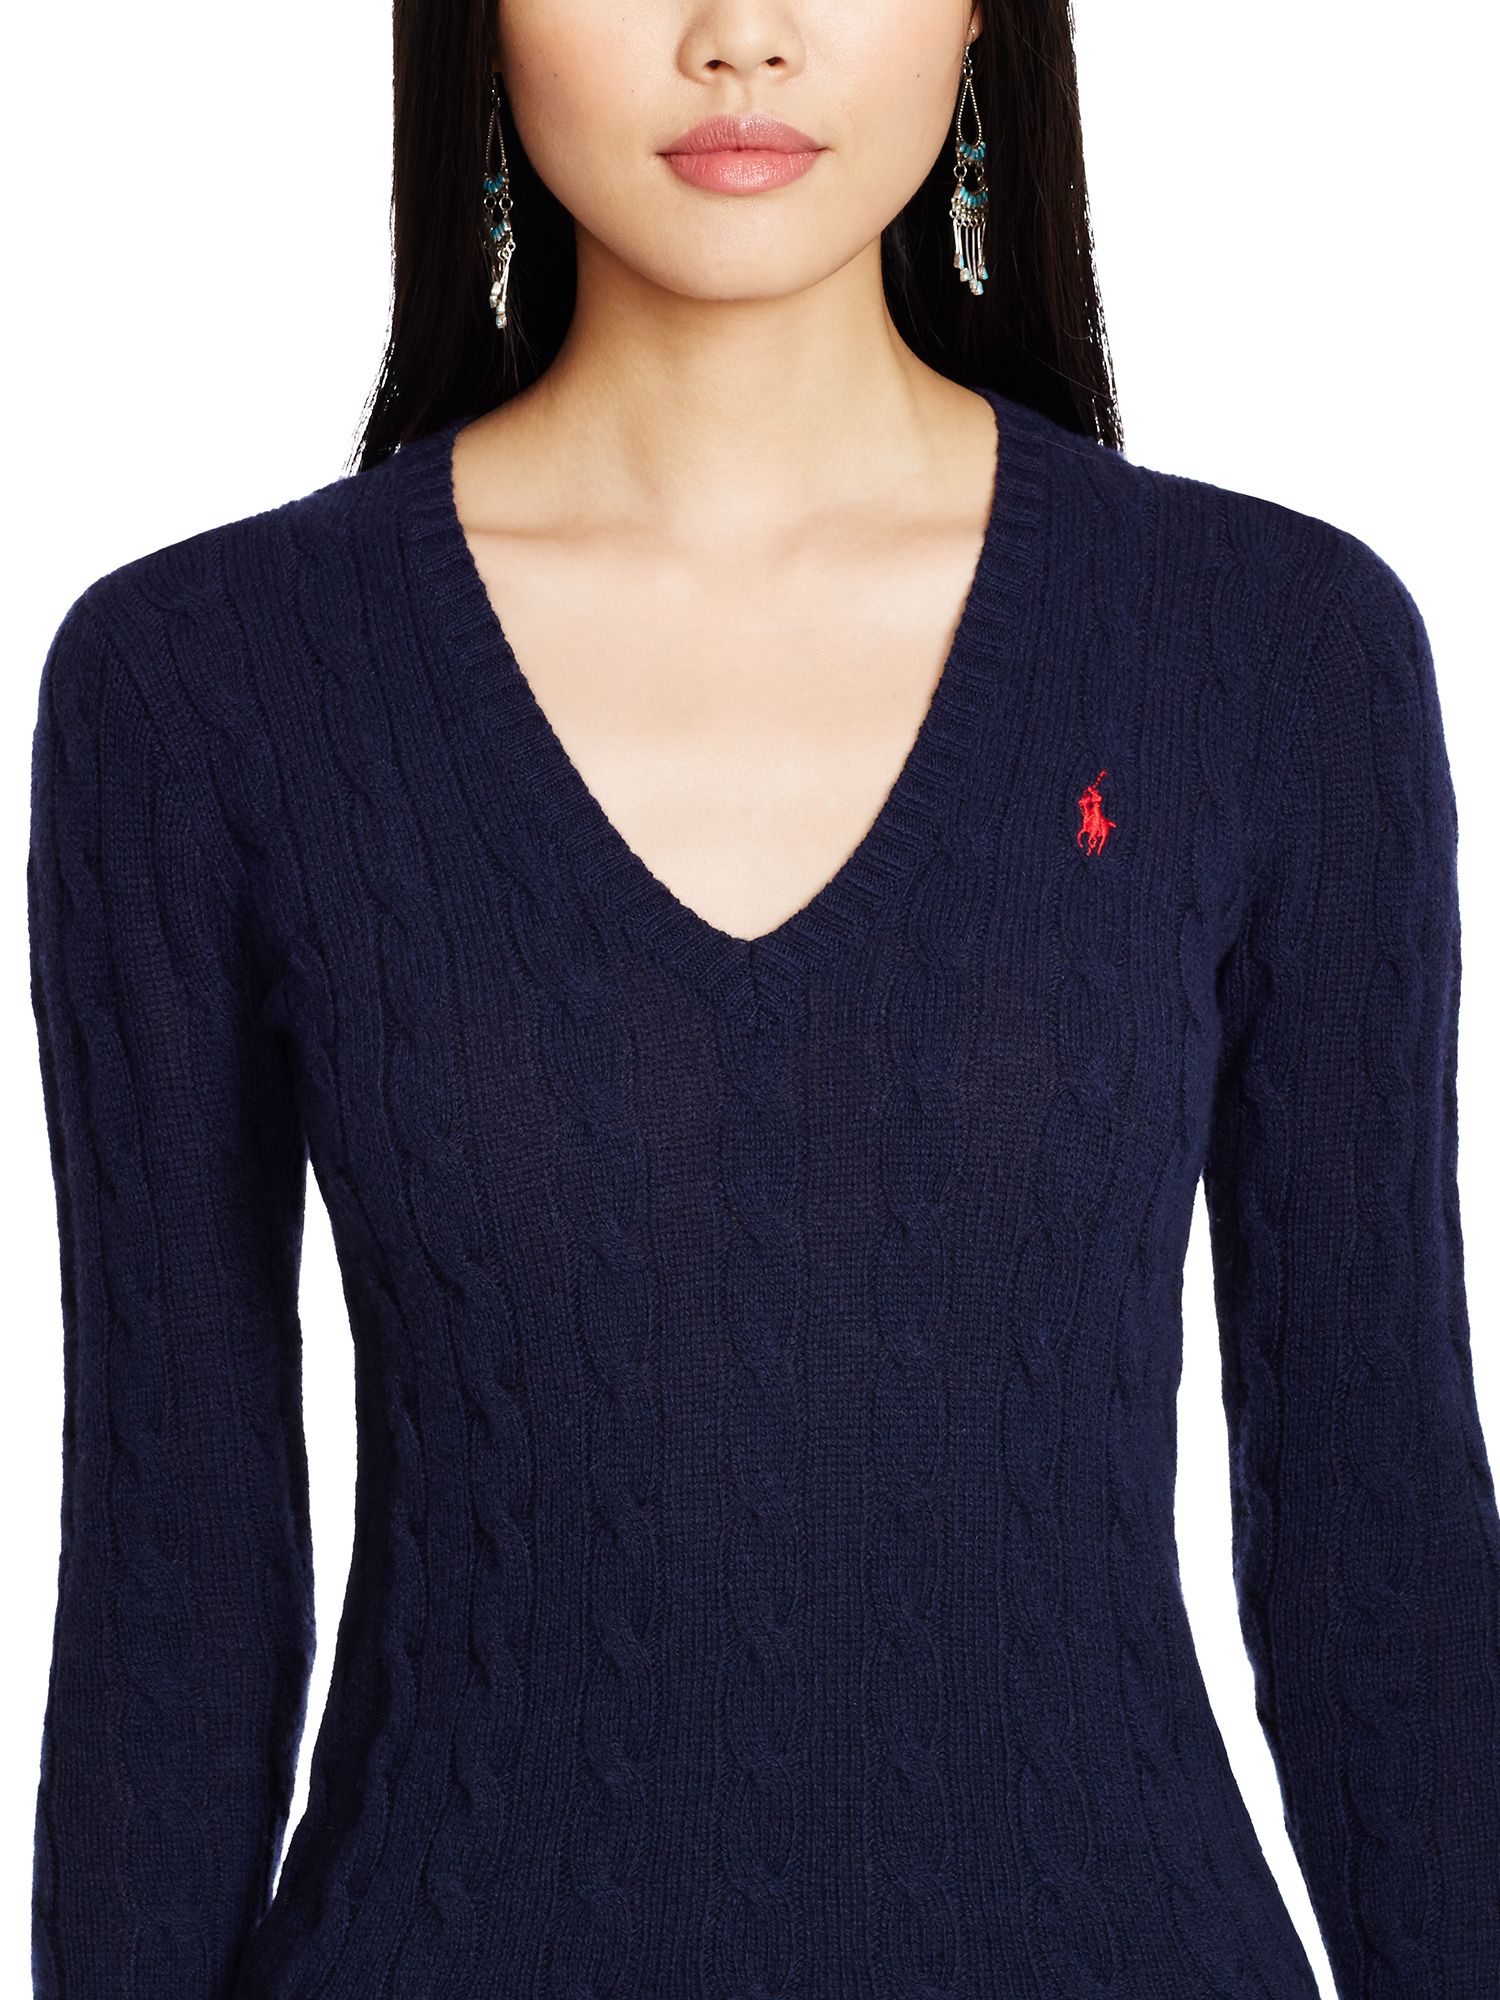 polo ralph lauren kimberly long sleeve sweater